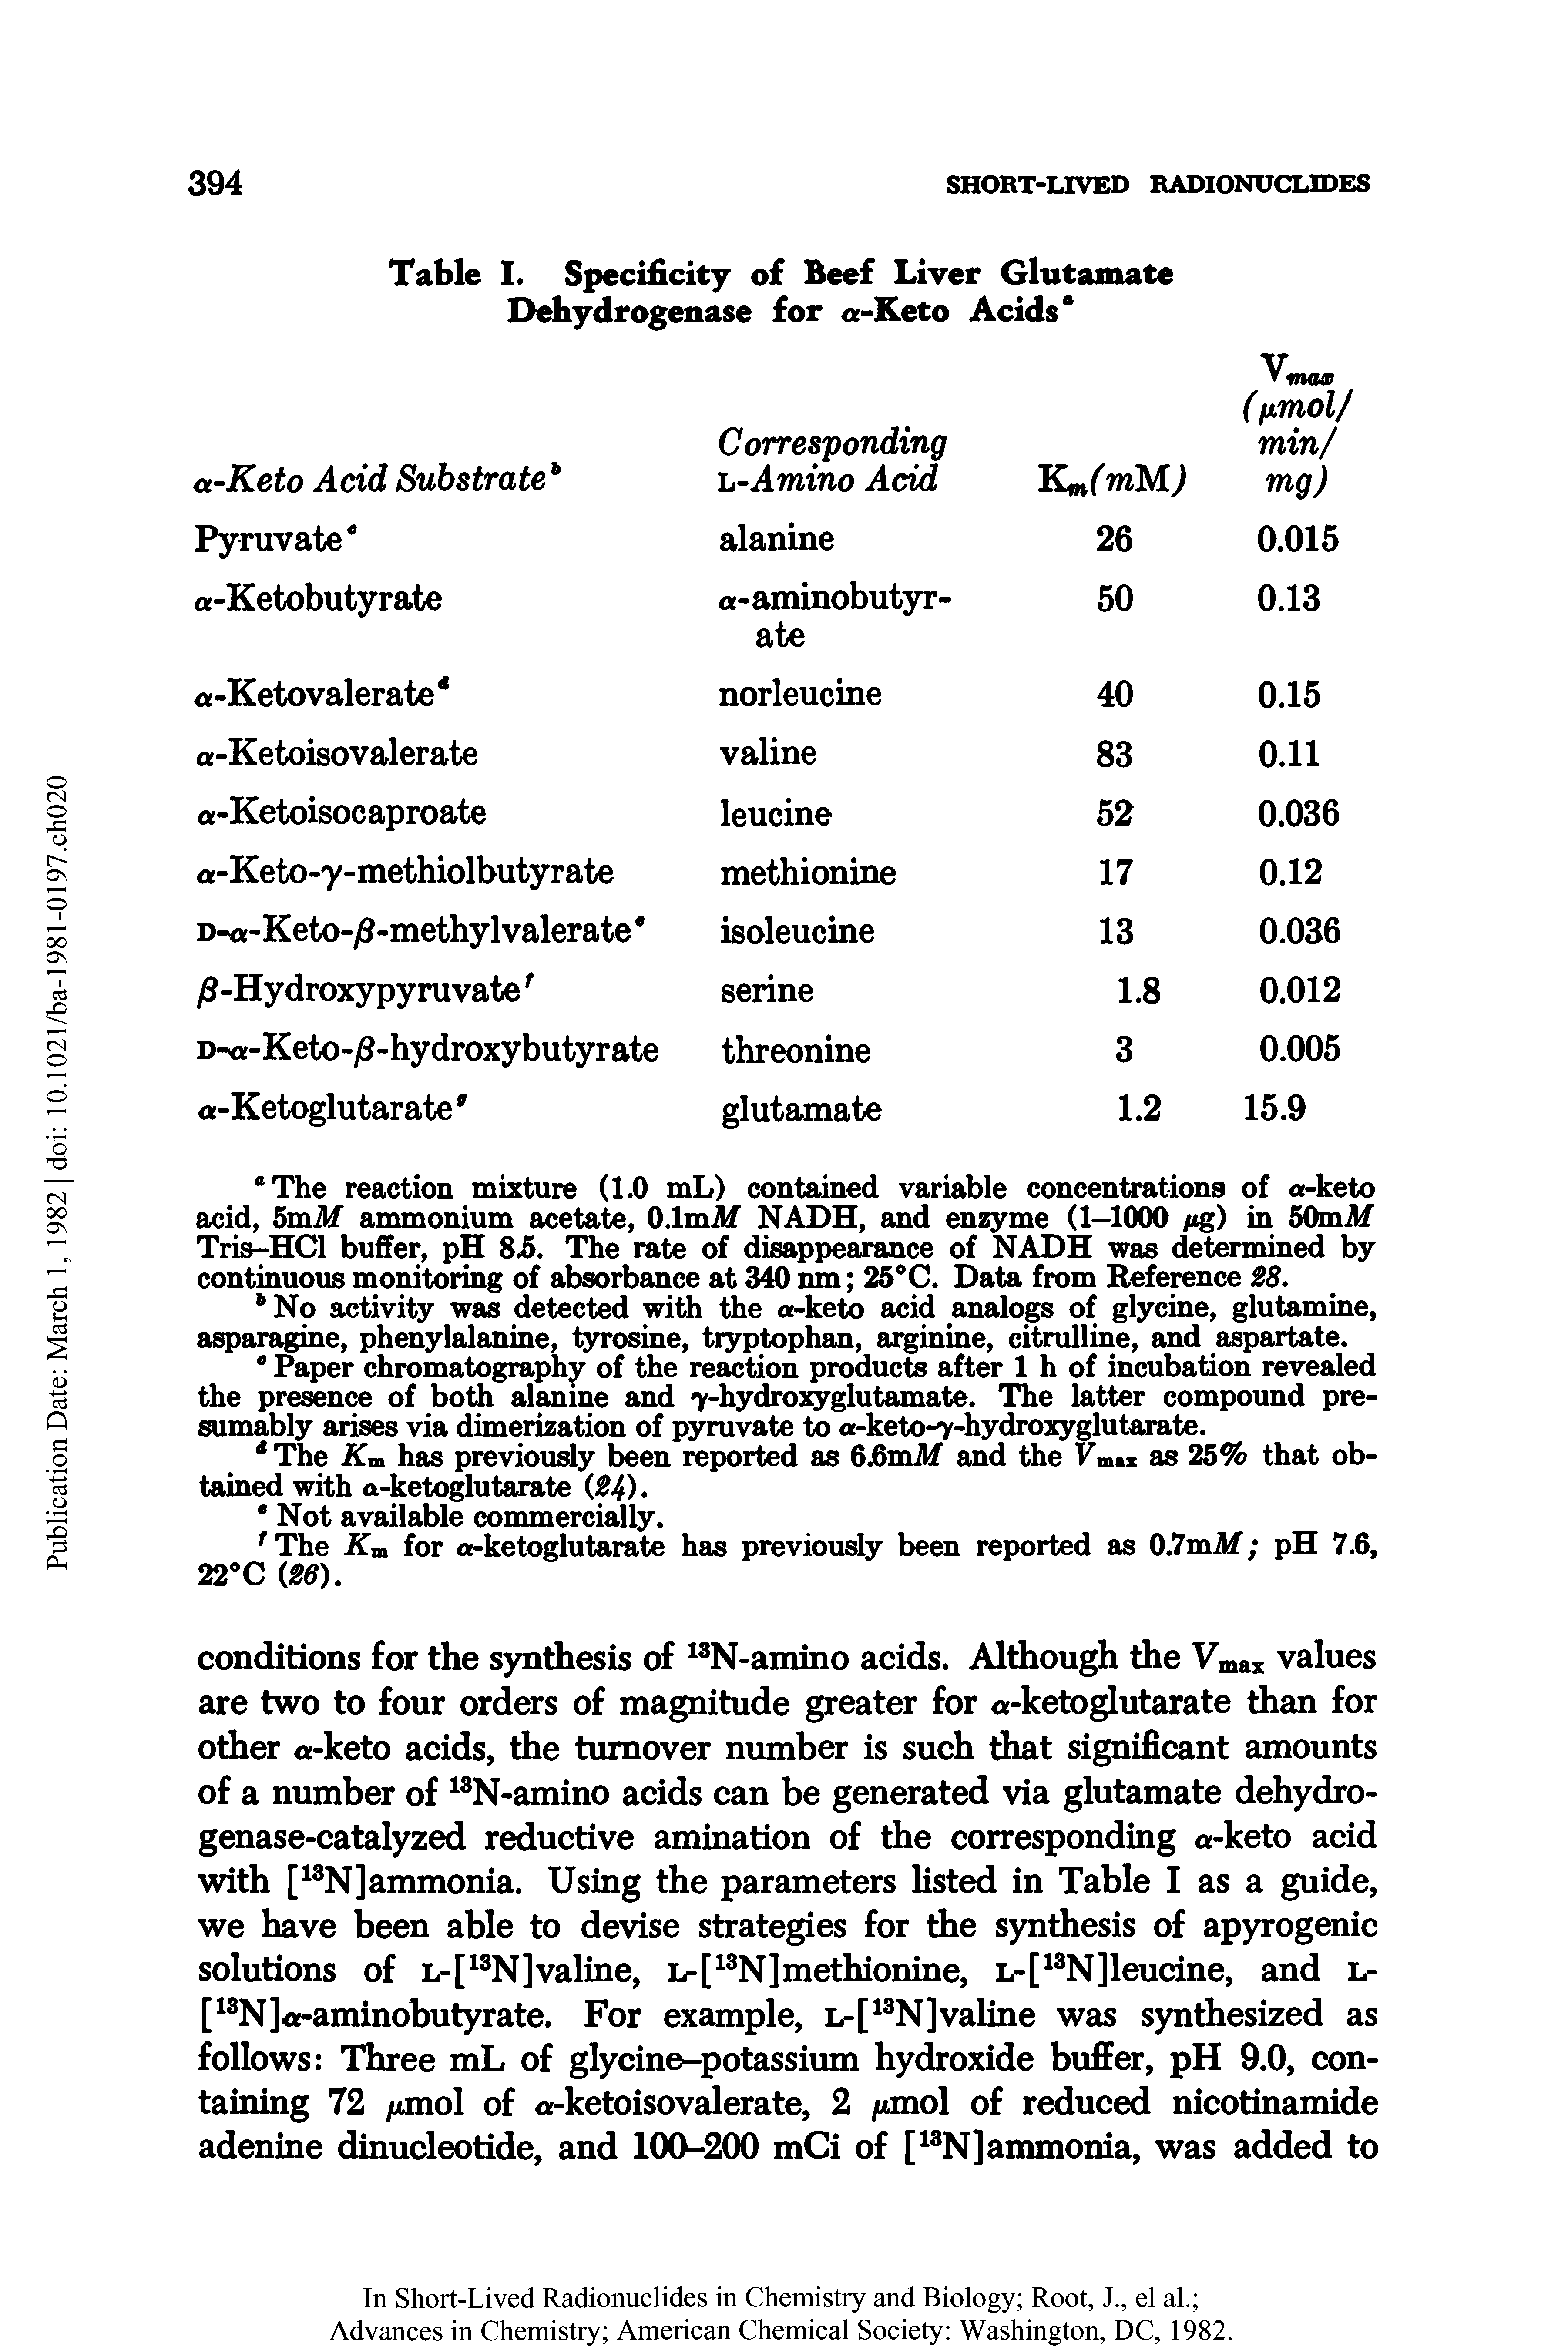 Table I. Specificity of Beef Liver Glutamate Dehydrogenase for a-Keto Acids ...